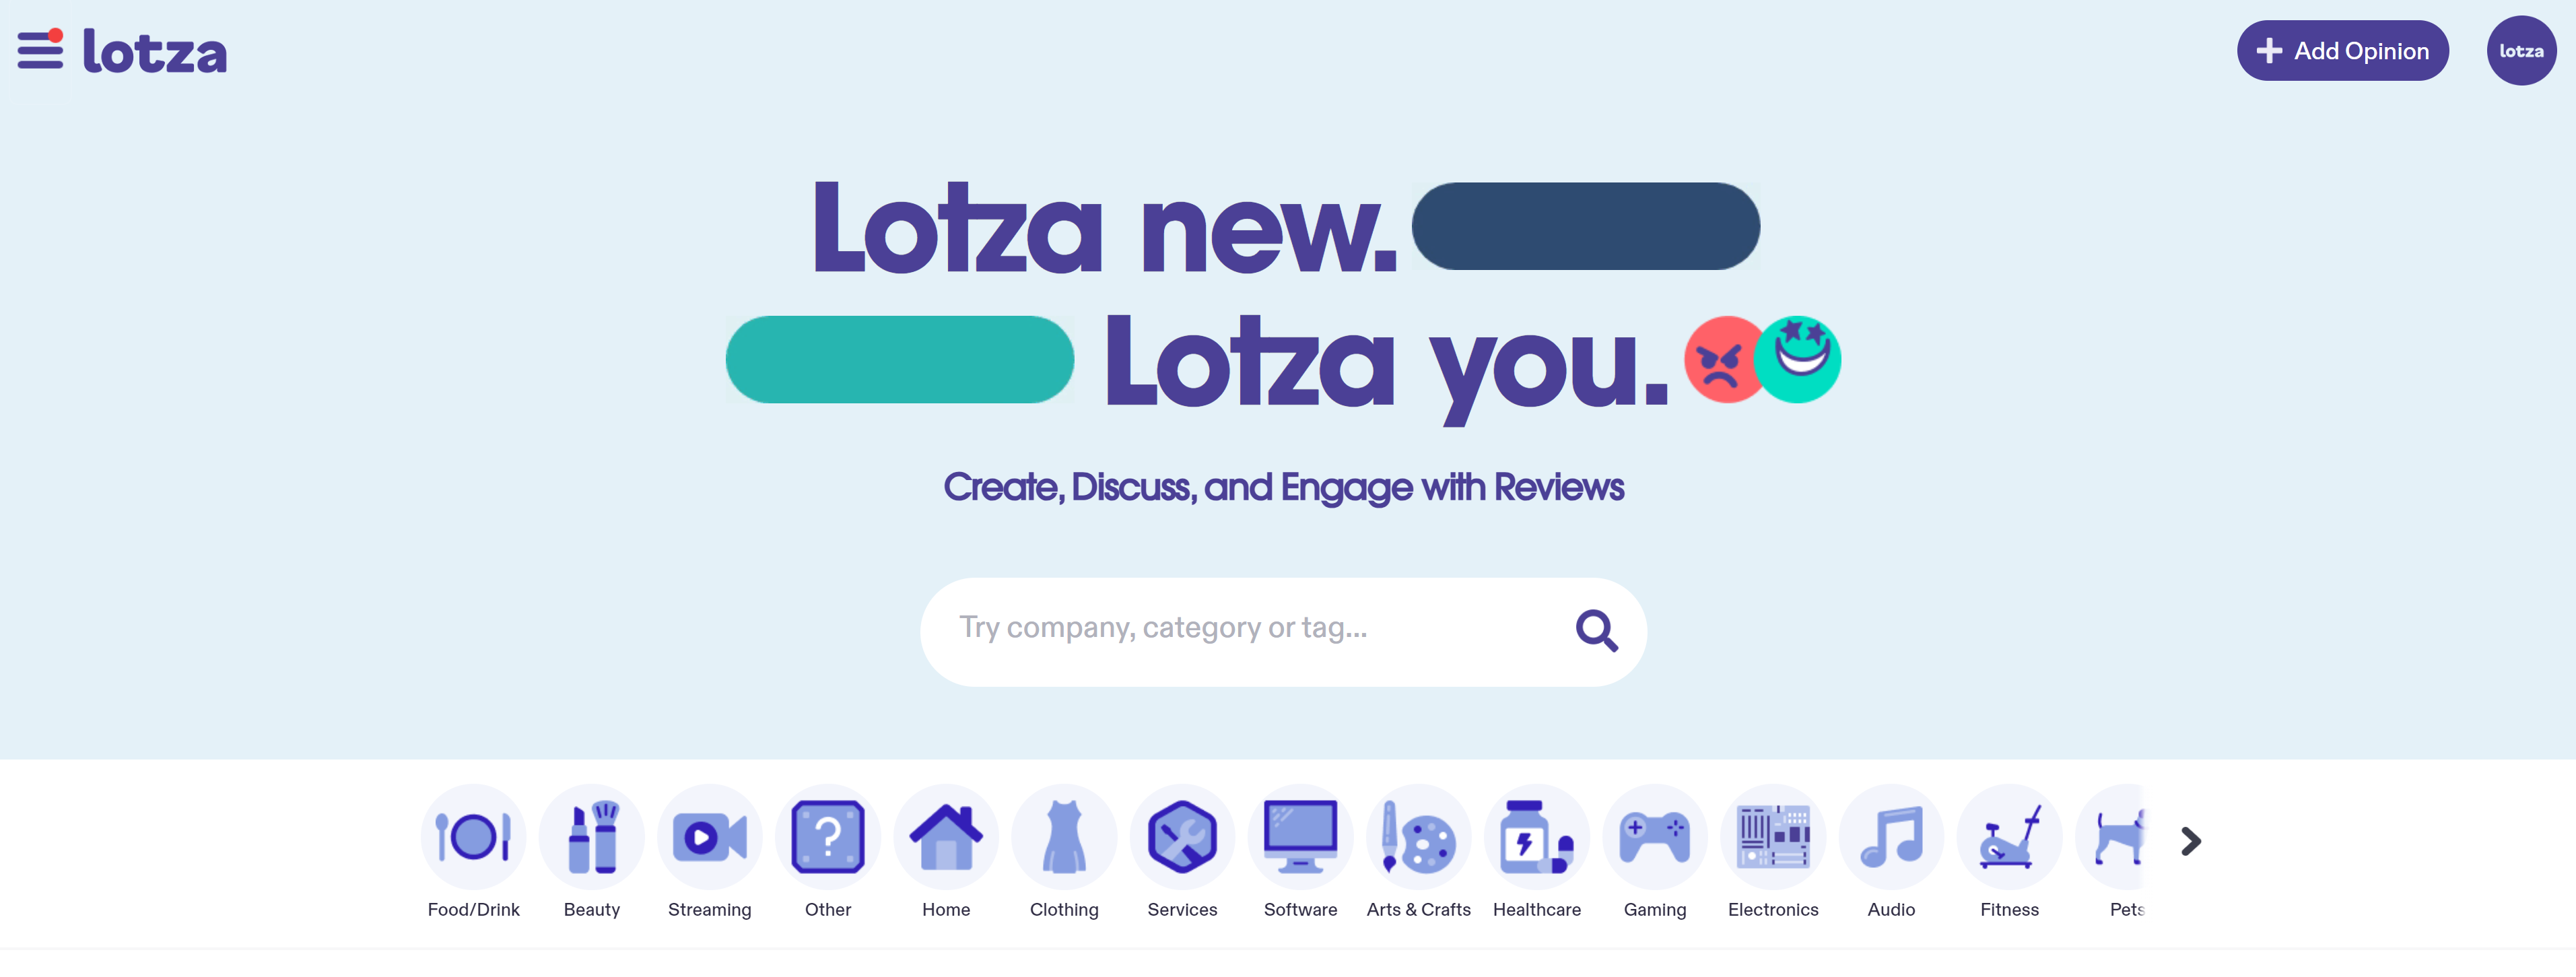 Wait, You Haven’t Heard of Lotza?